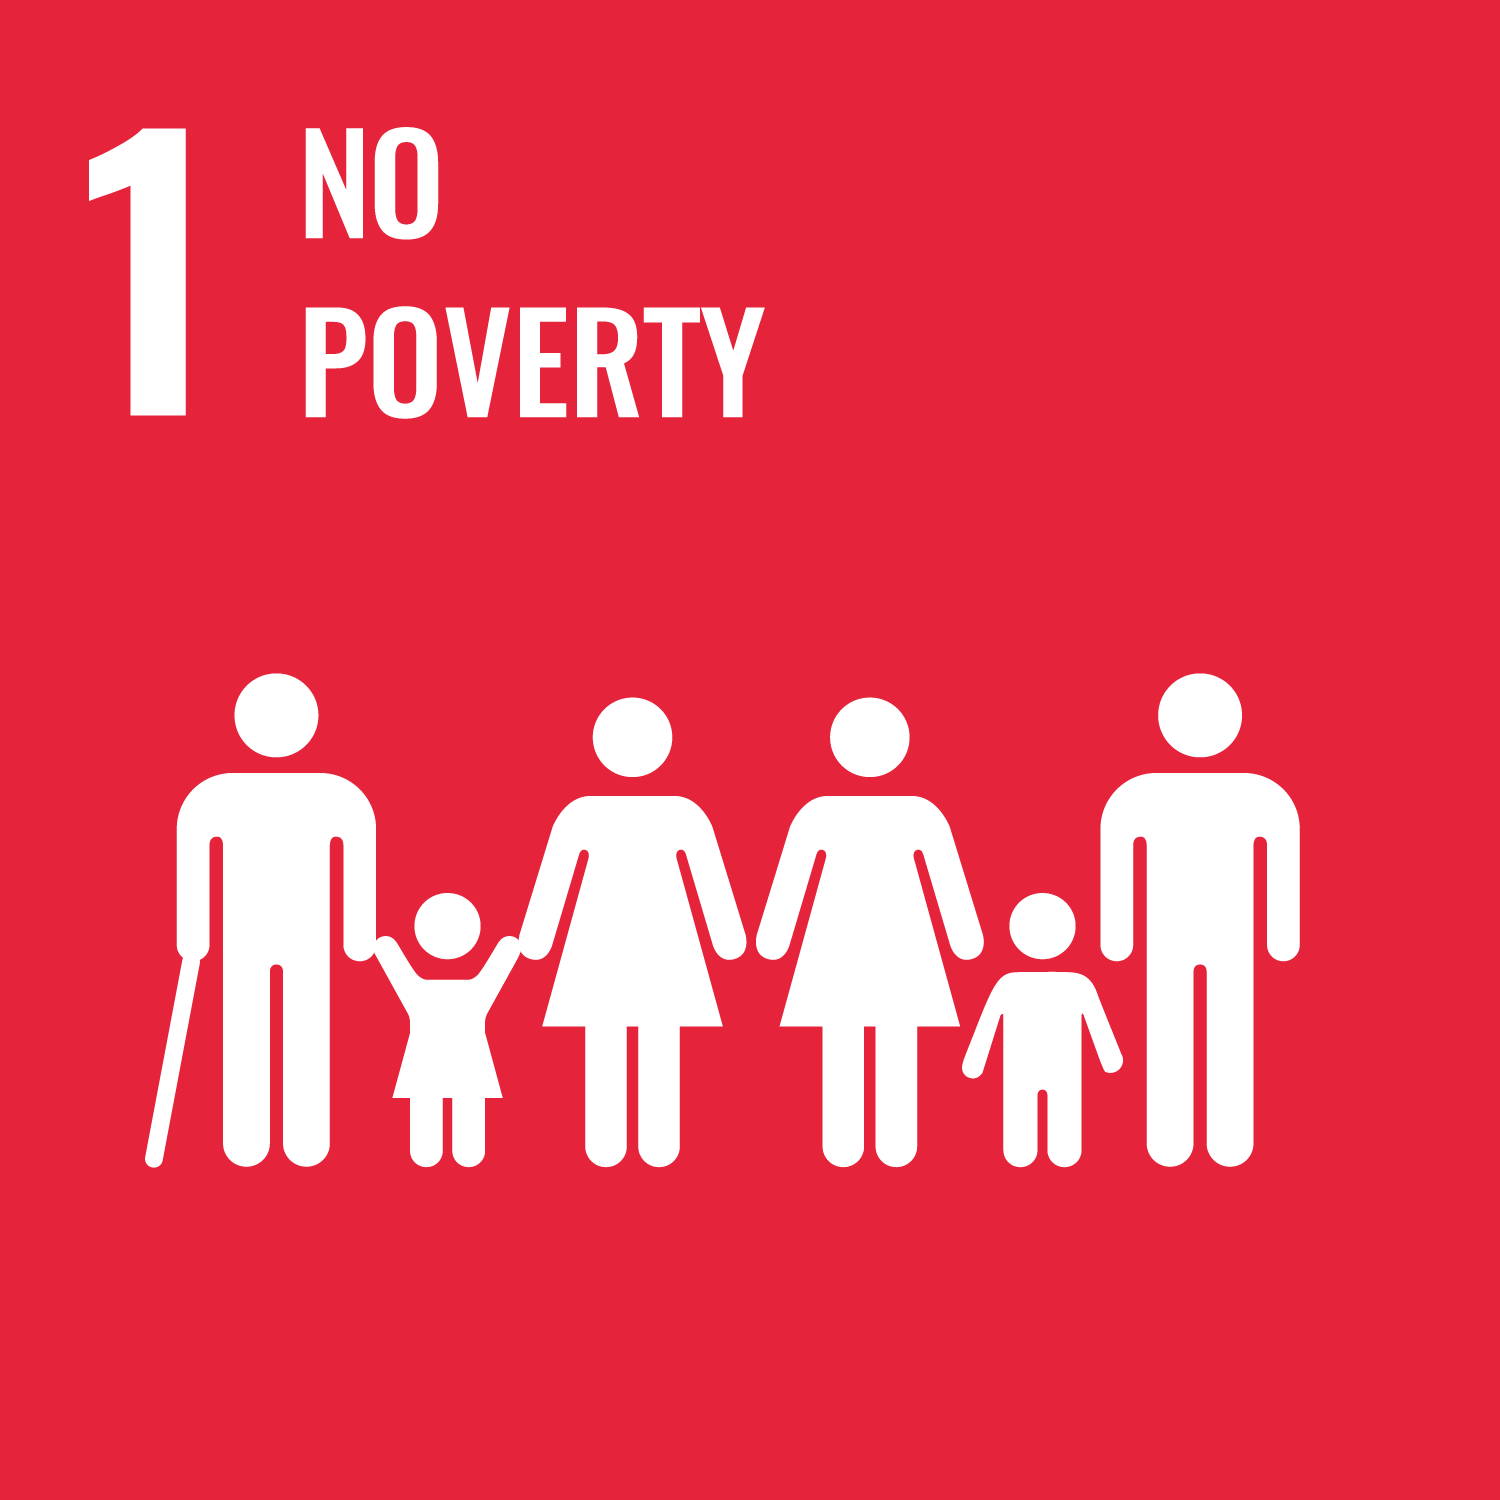 UN Sustainable Development Goals Number 1 No Poverty